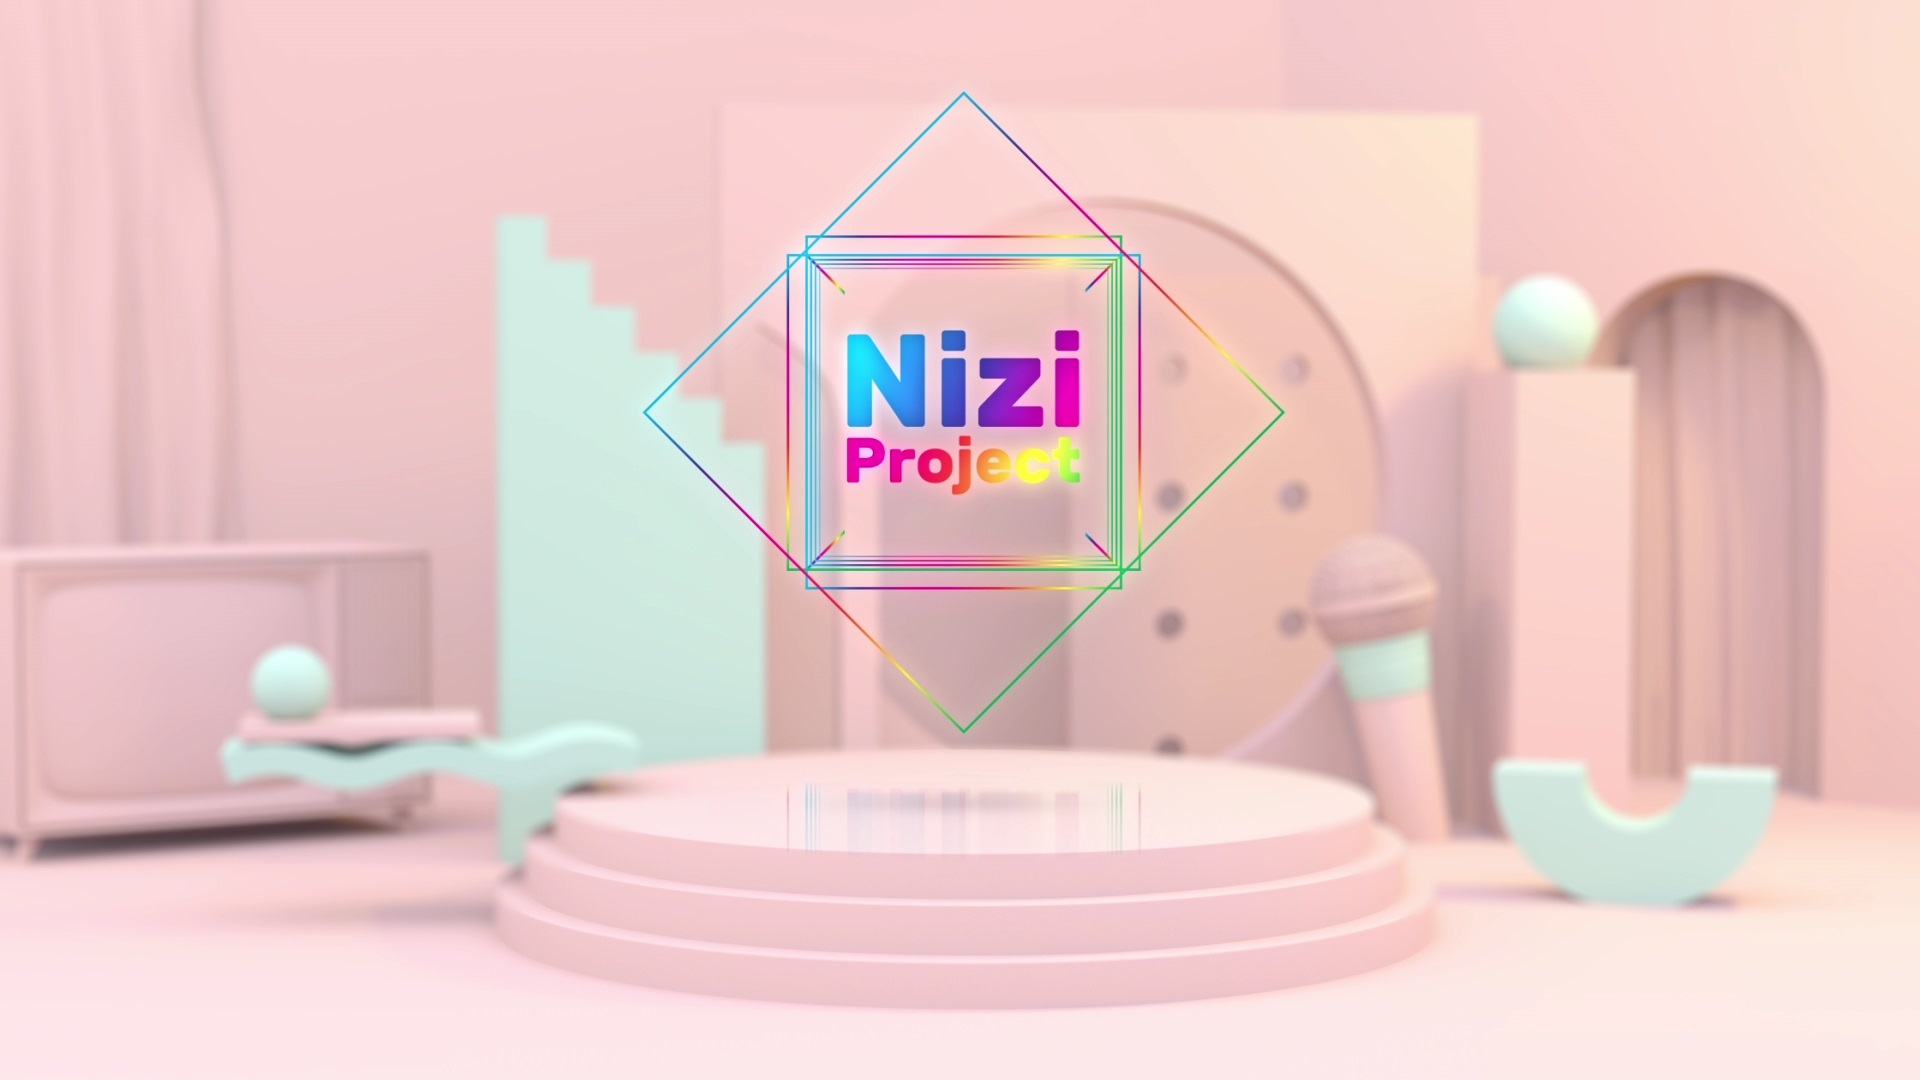 Nizi Project Wallpapers